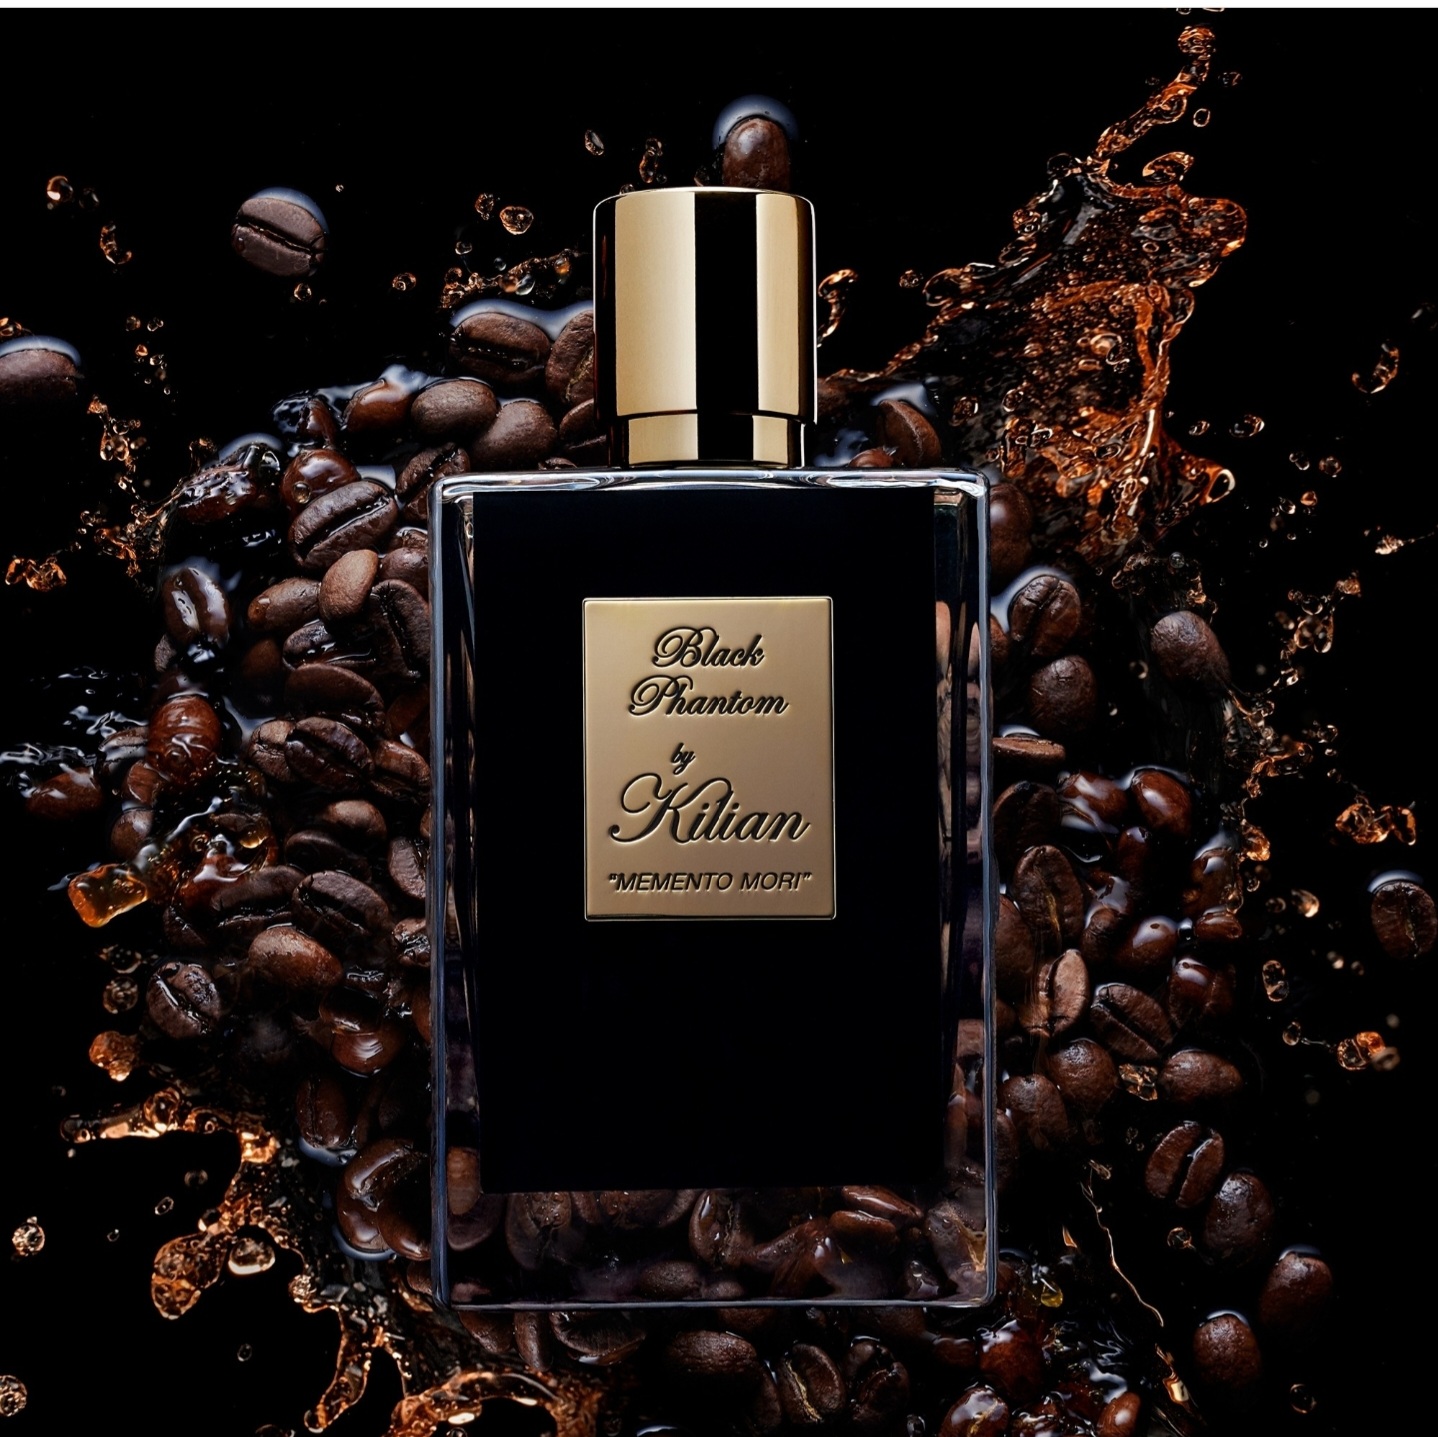 Free Sample of Kilian Black Phantom Perfume